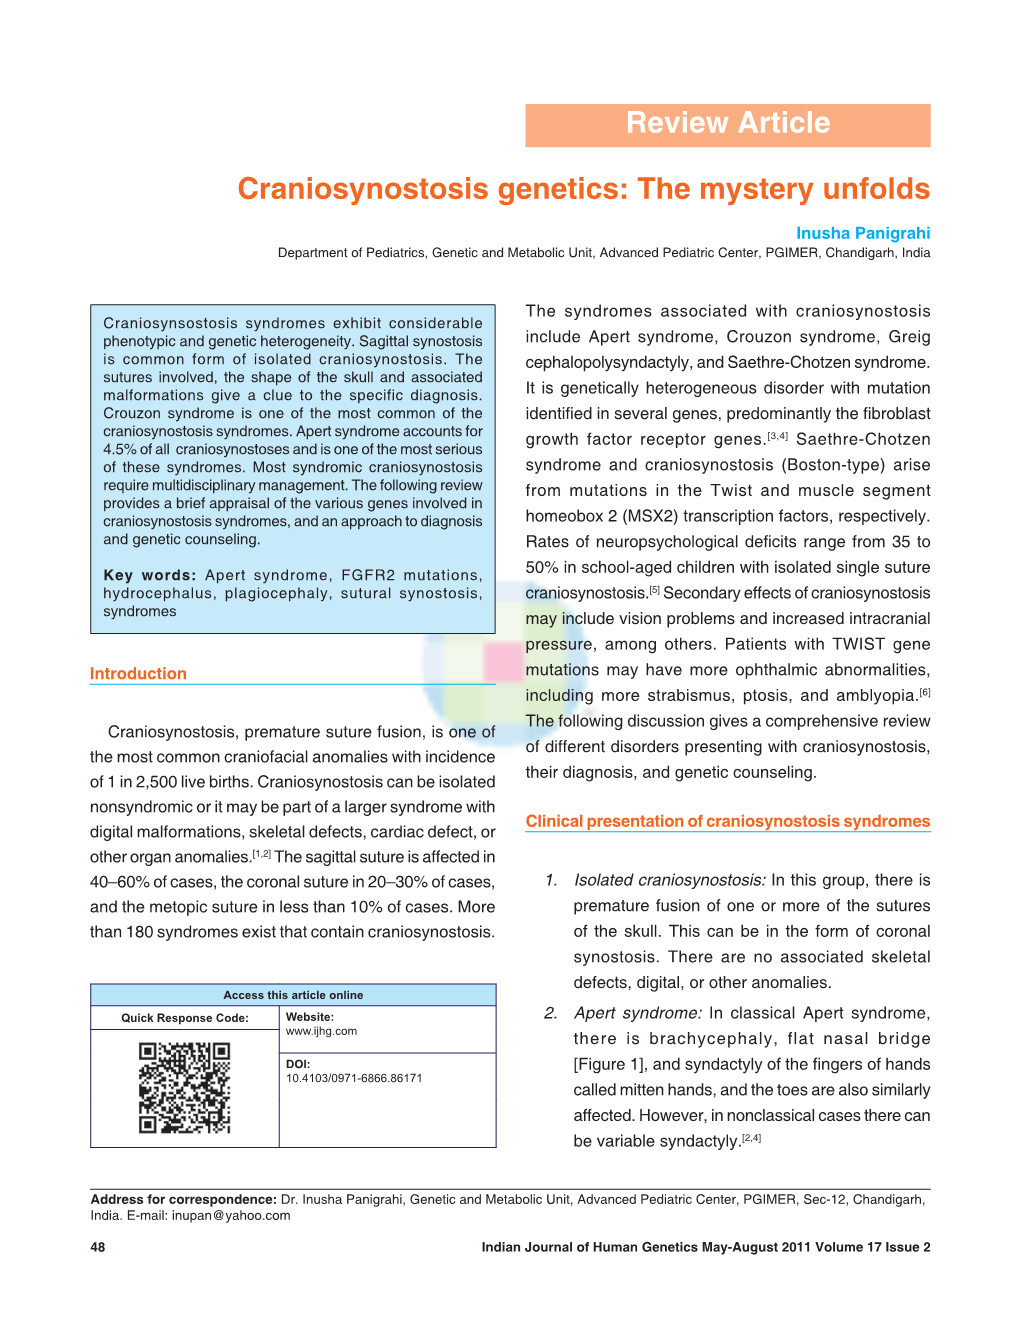 Craniosynostosis Genetics: the Mystery Unfolds